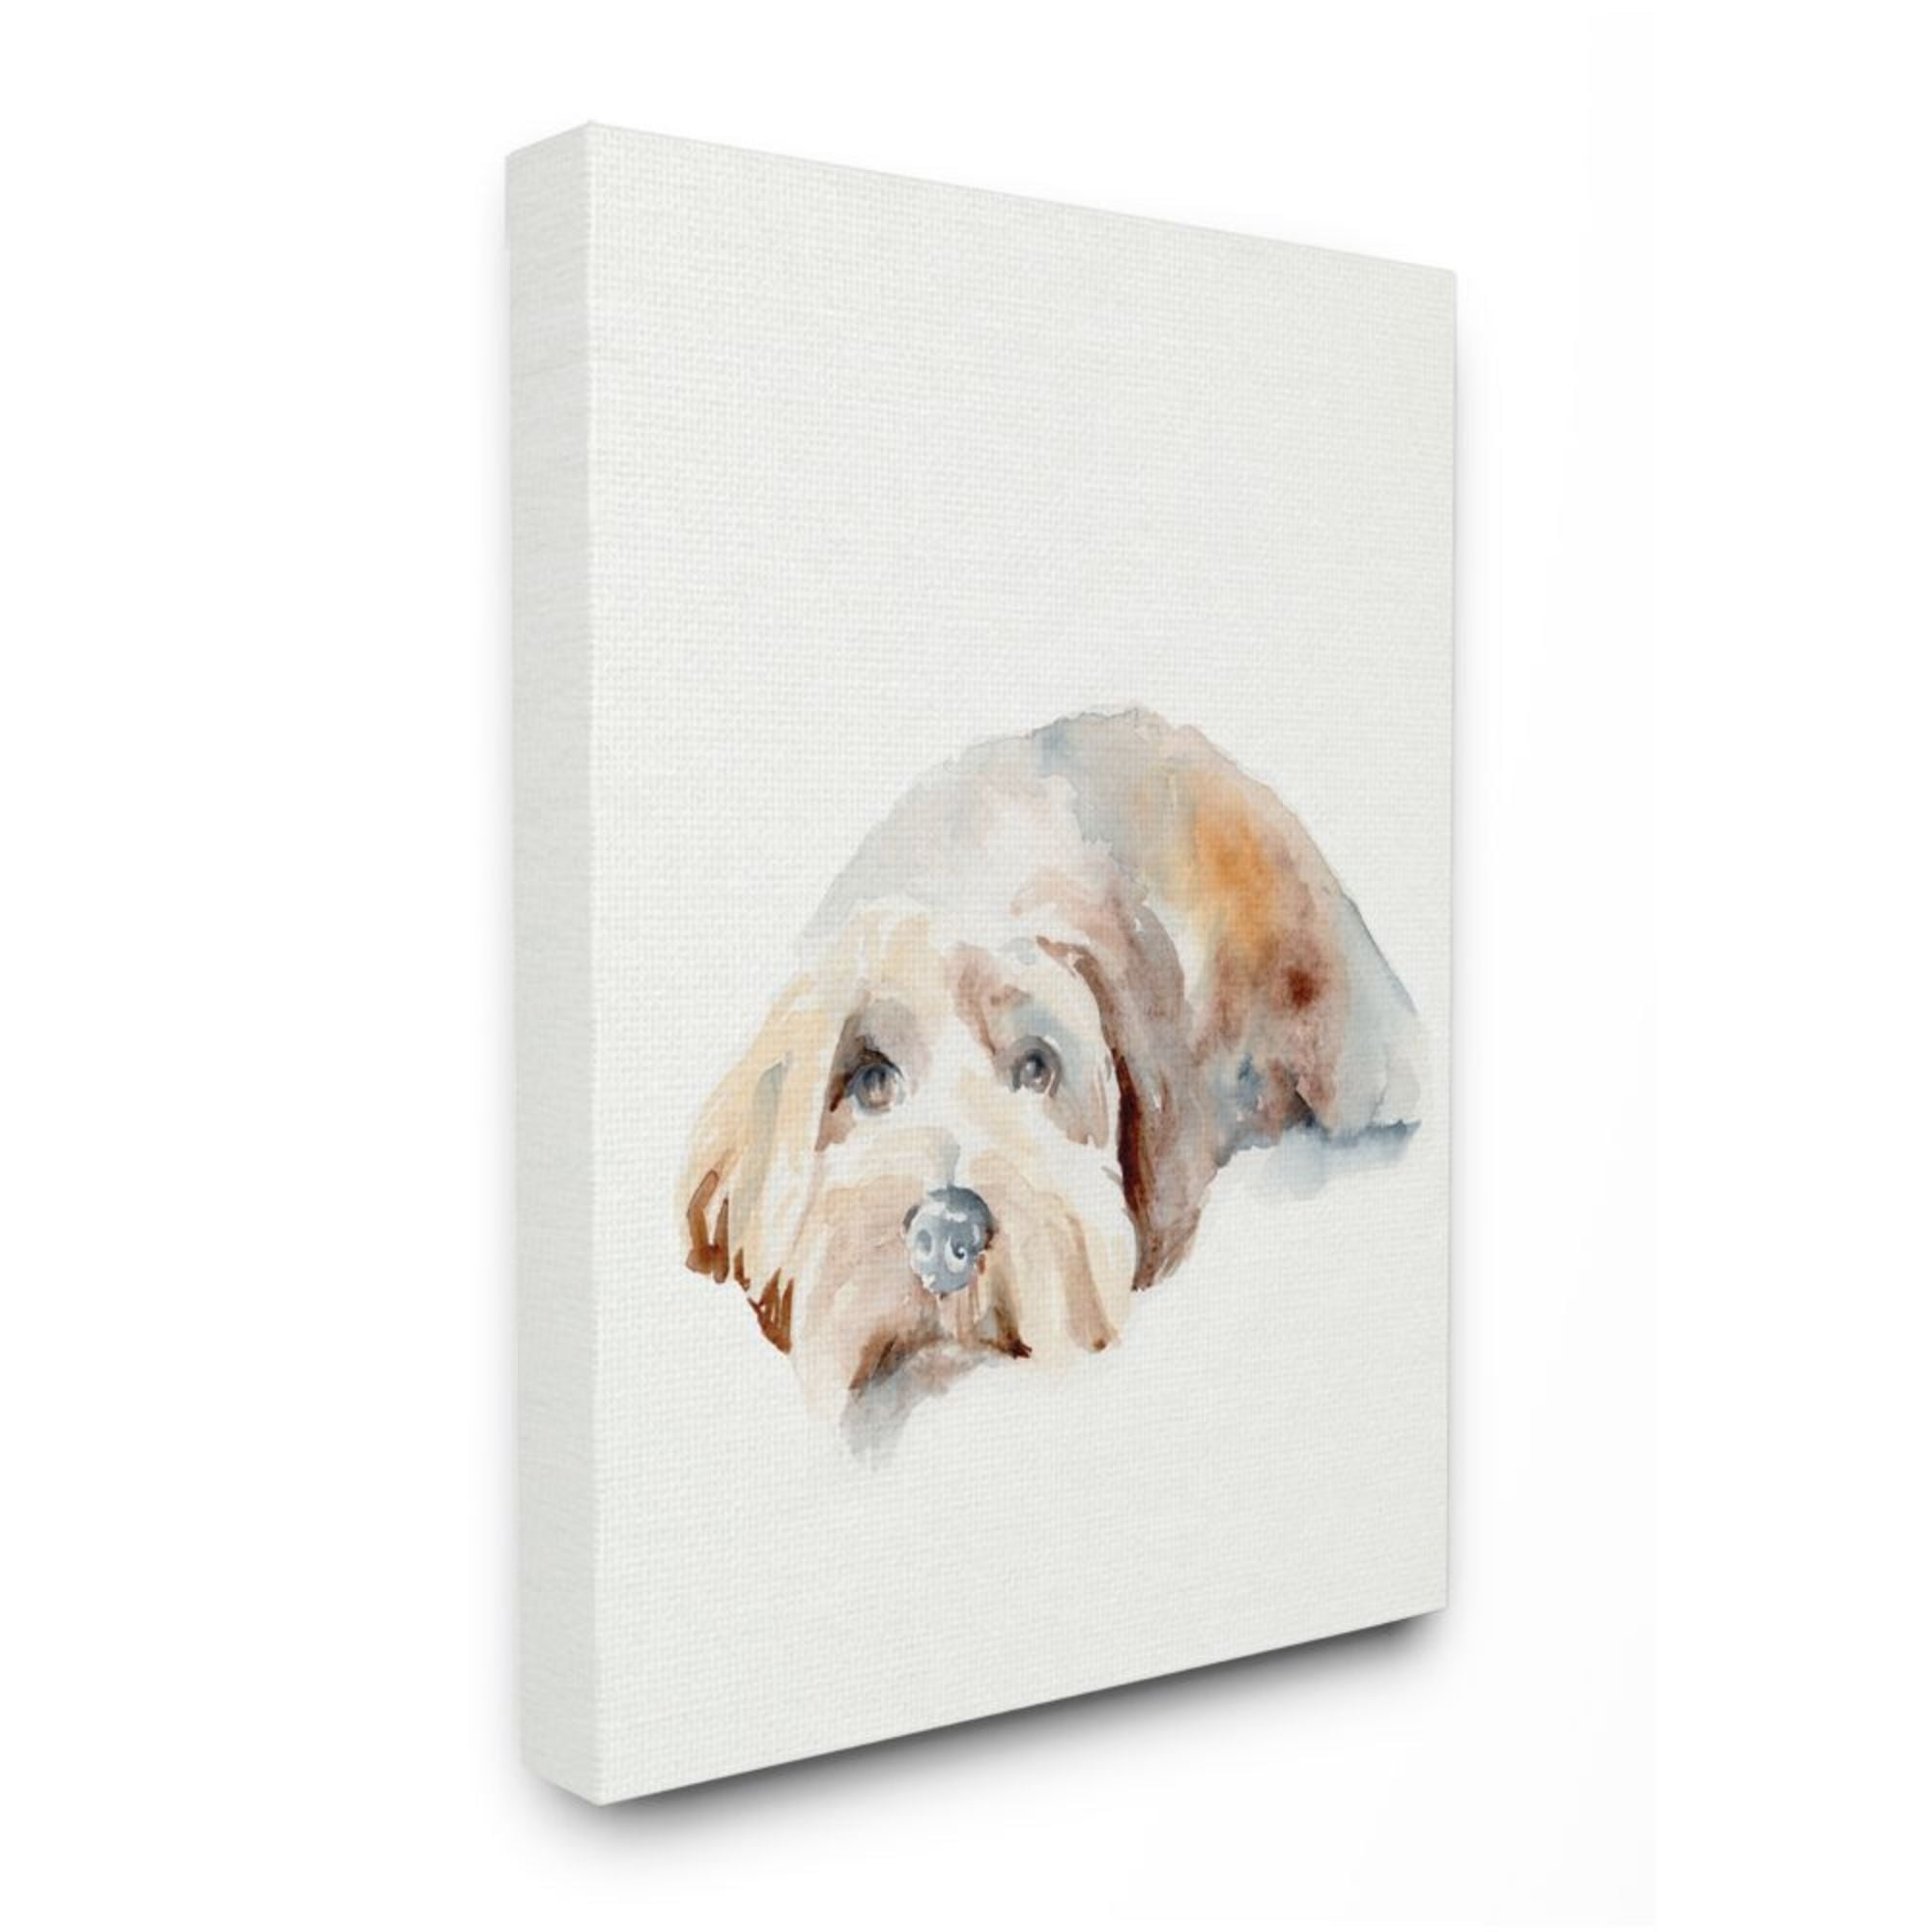 Stanley - Cute Dog Wall Art Print - Studio Patty D